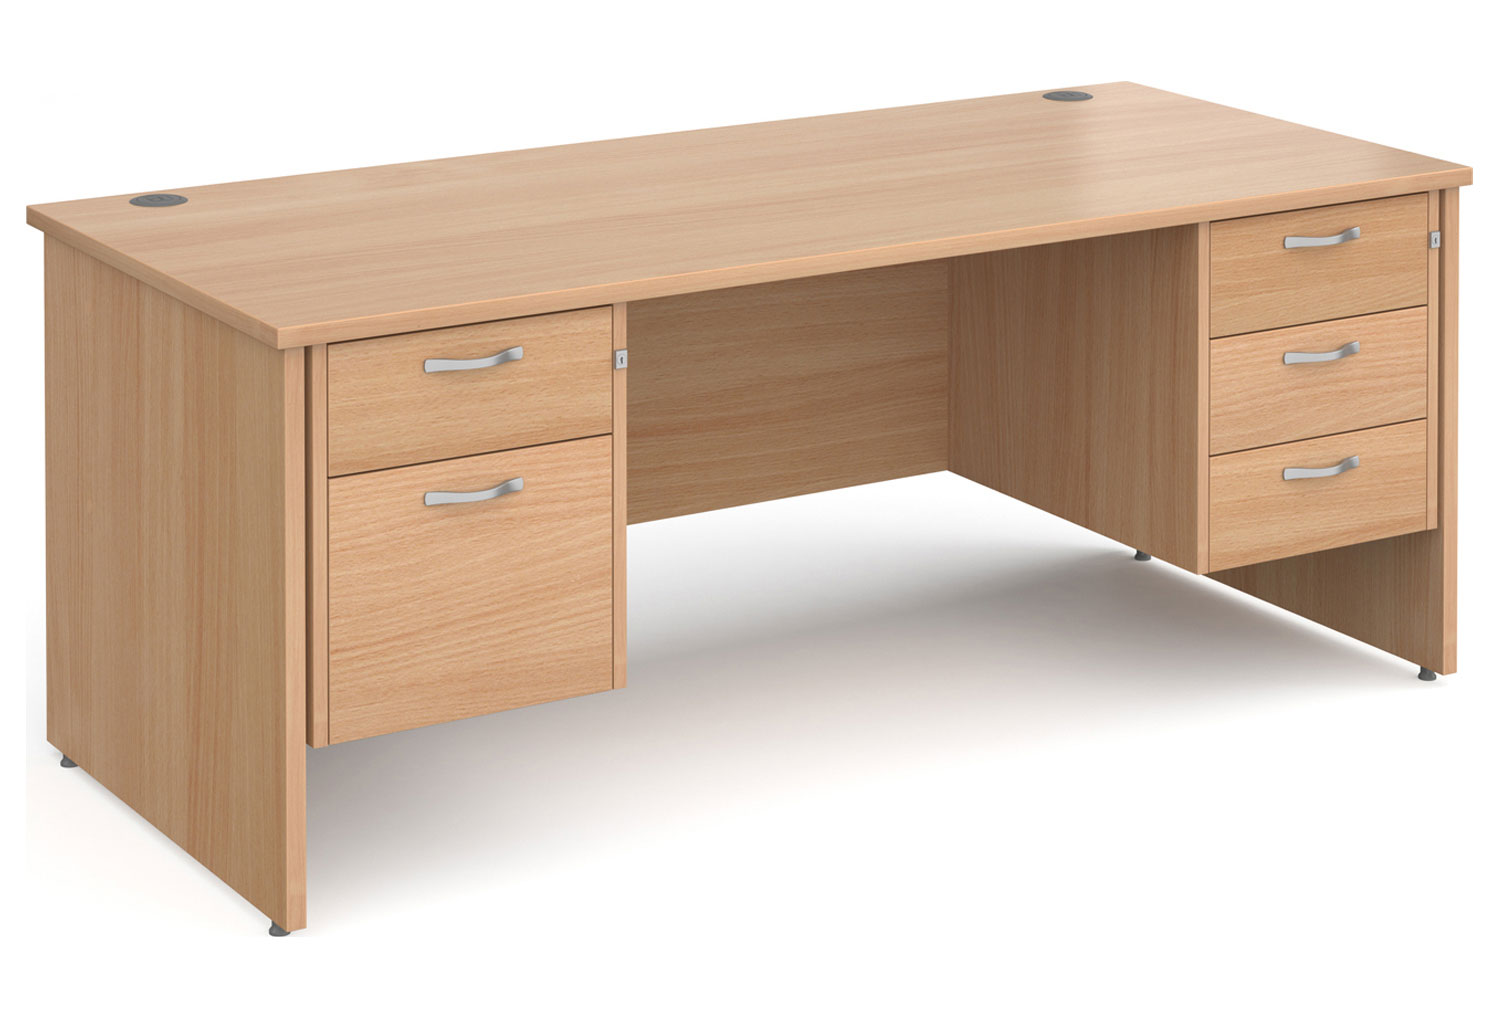 Tully Panel End Rectangular Office Desk 2+3 Drawers, 180wx80dx73h (cm), Beech